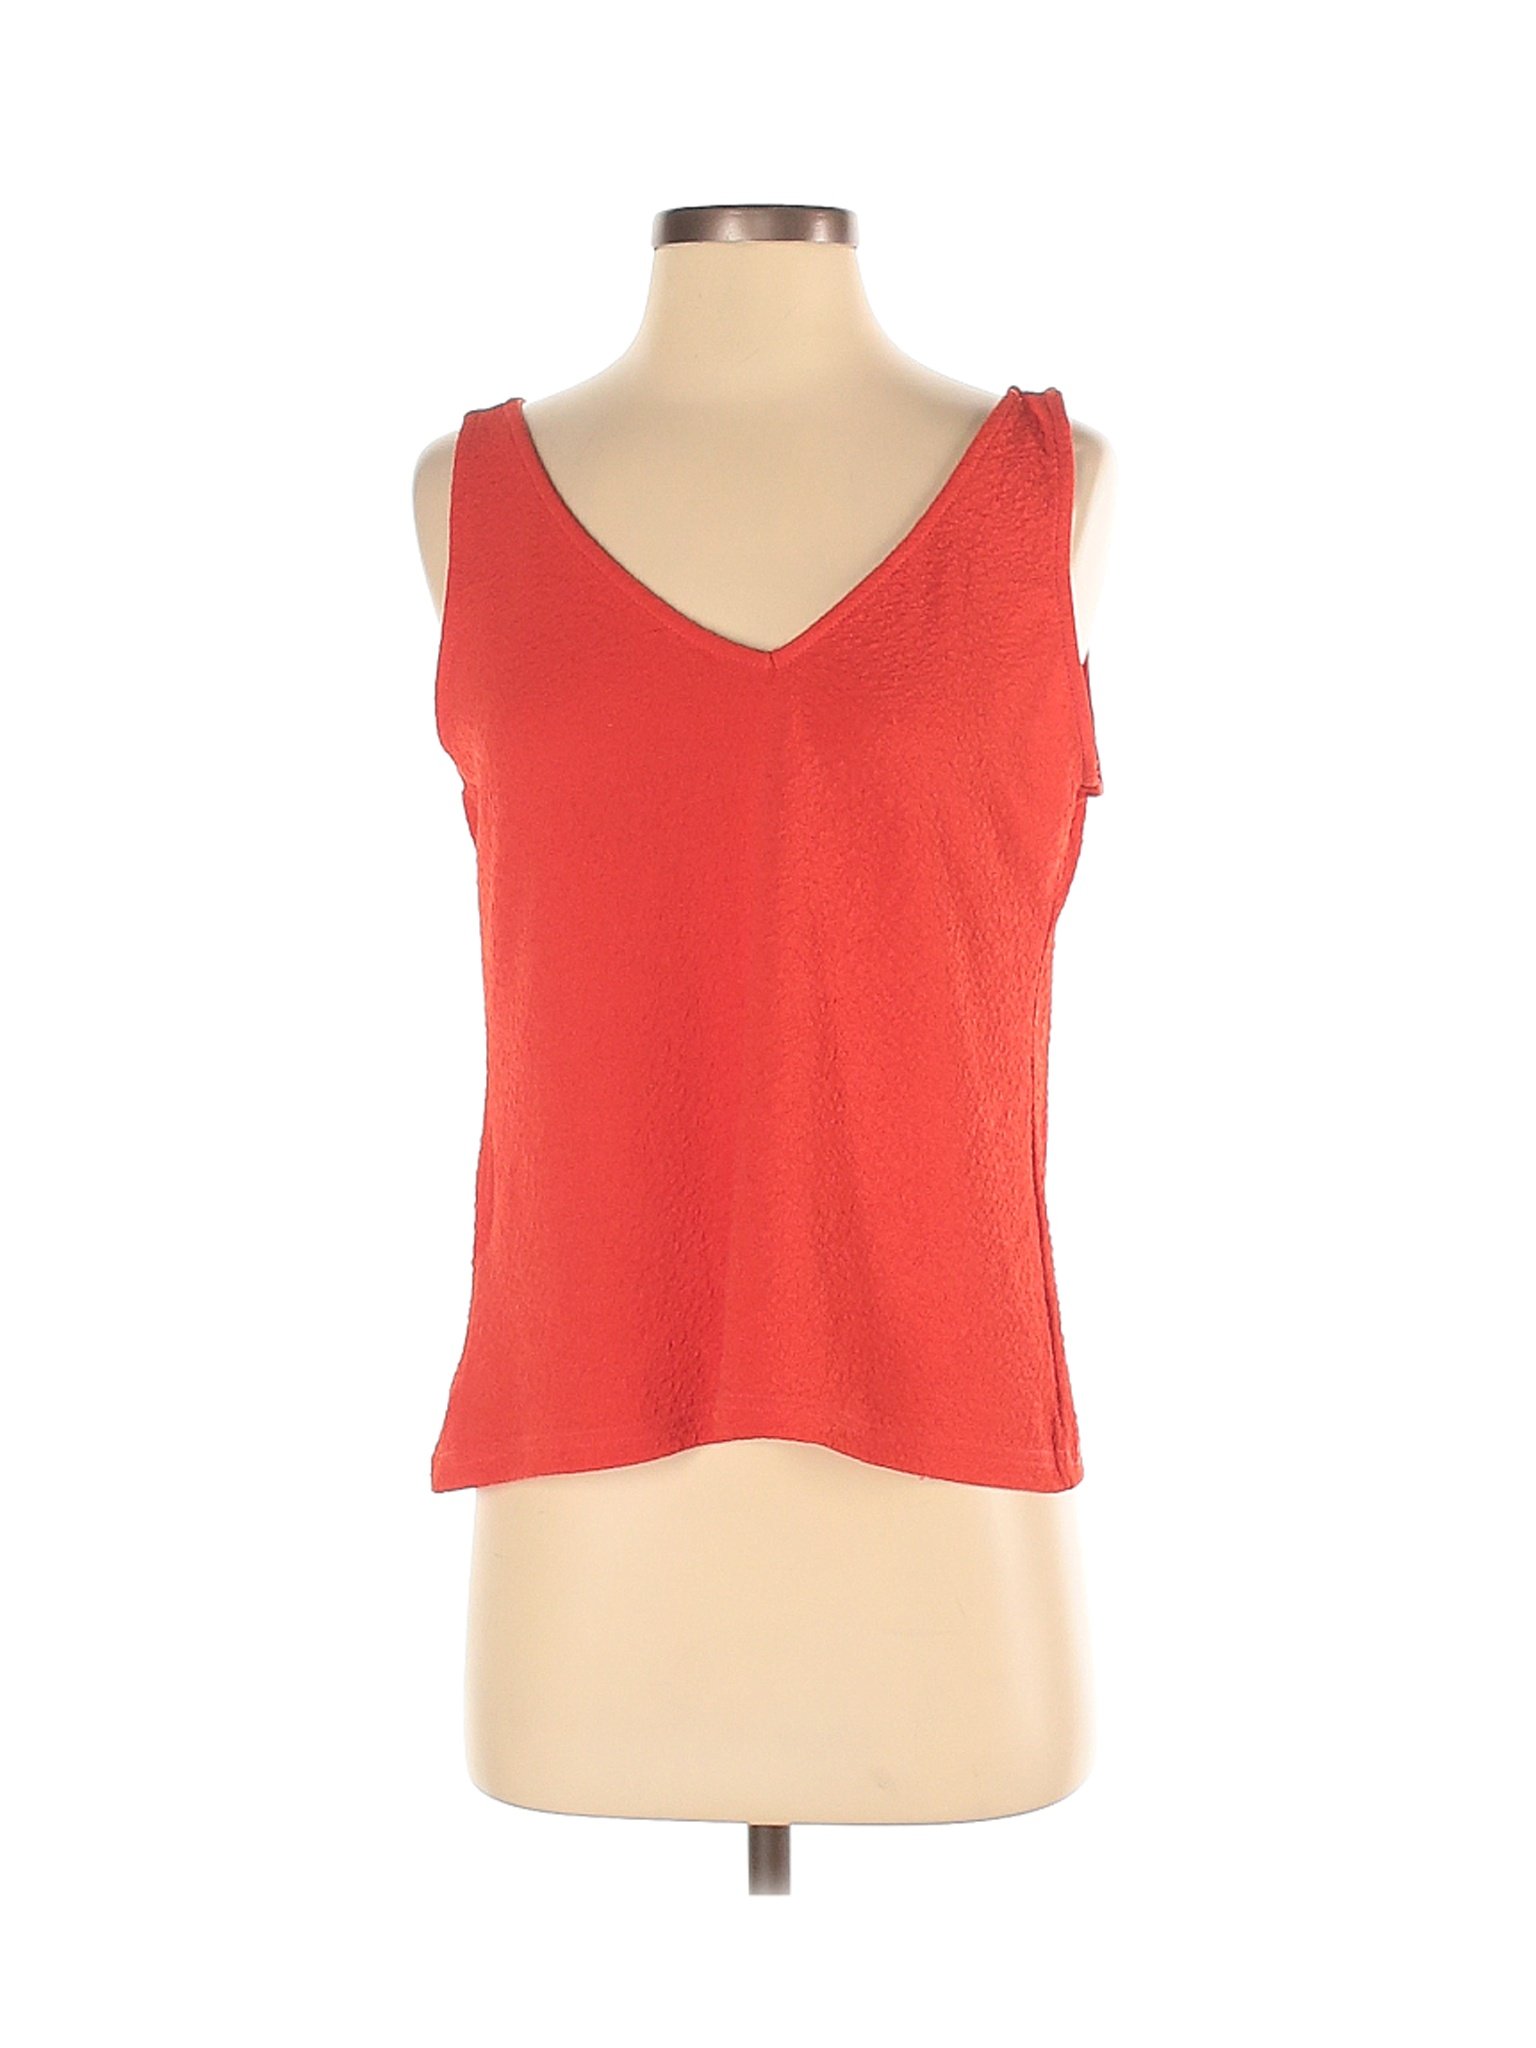 Assorted Brands Women Orange Sleeveless Top S | eBay